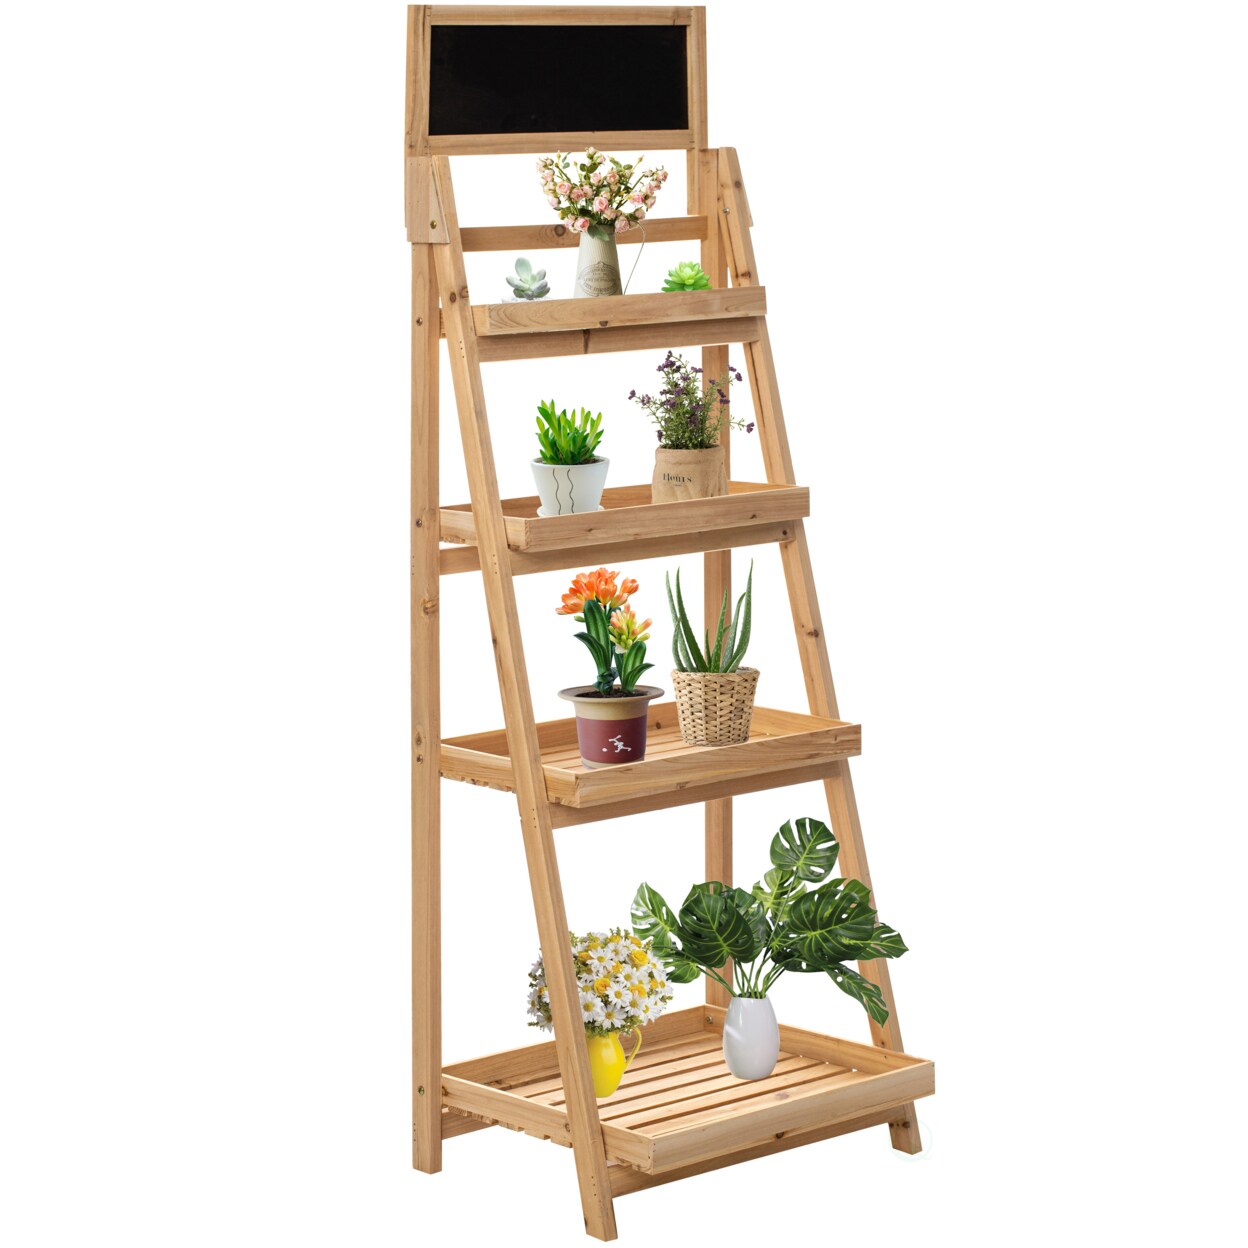 Vintiquewise Decorative Wooden 4-Tier Chalkboard Ladder Shelf Flower Plant Pot Display Shelf Bookshelf Plant Flower Stand Storage